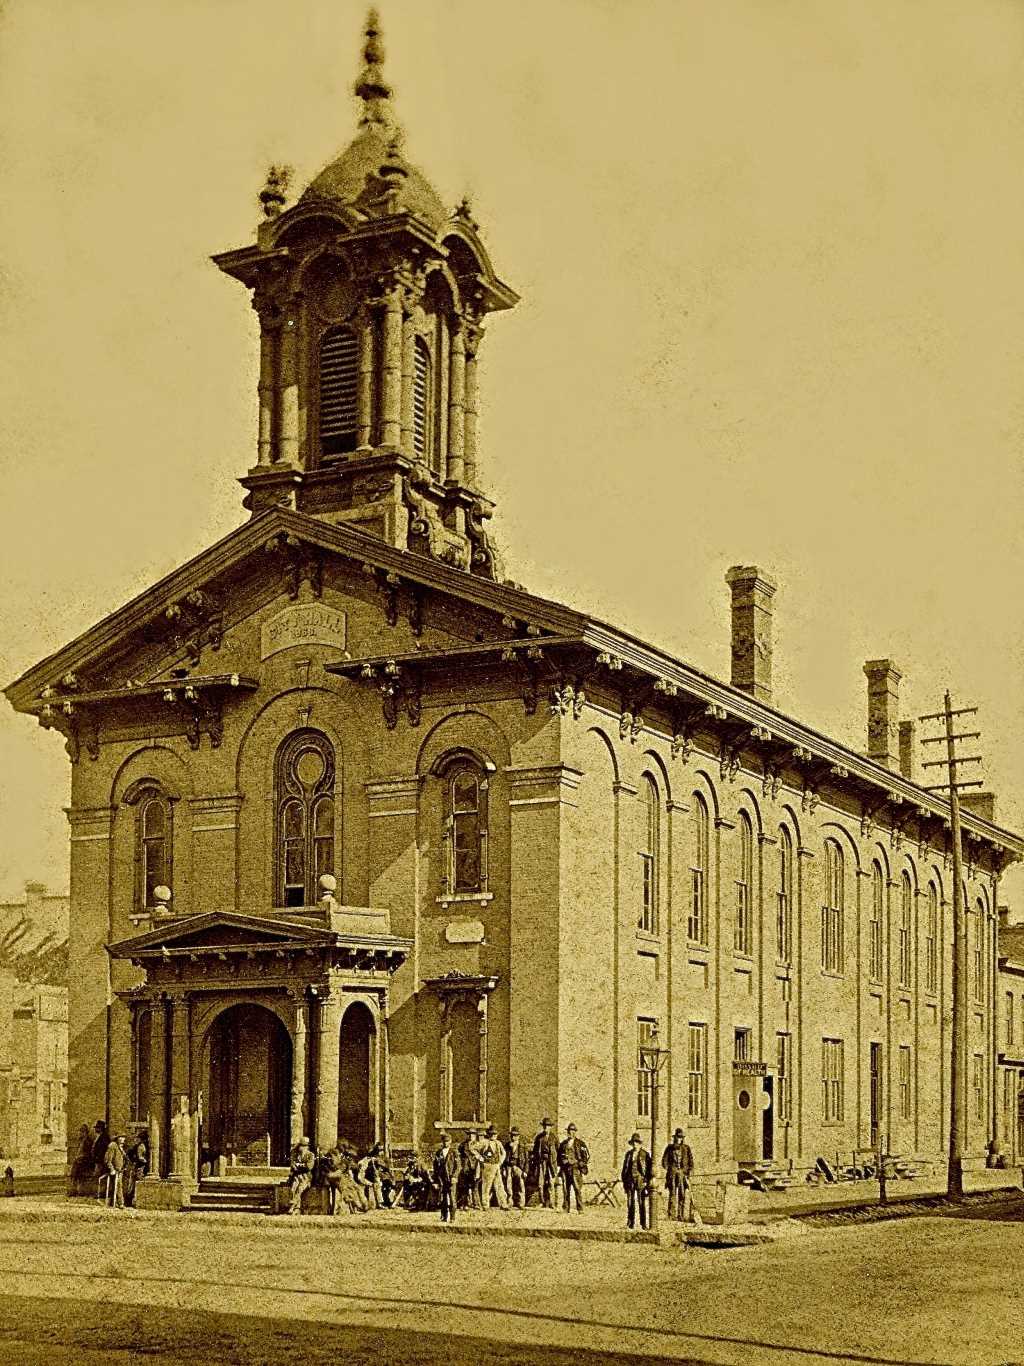 City Hall, 1880. Image courtesy of Jeff Beutner.